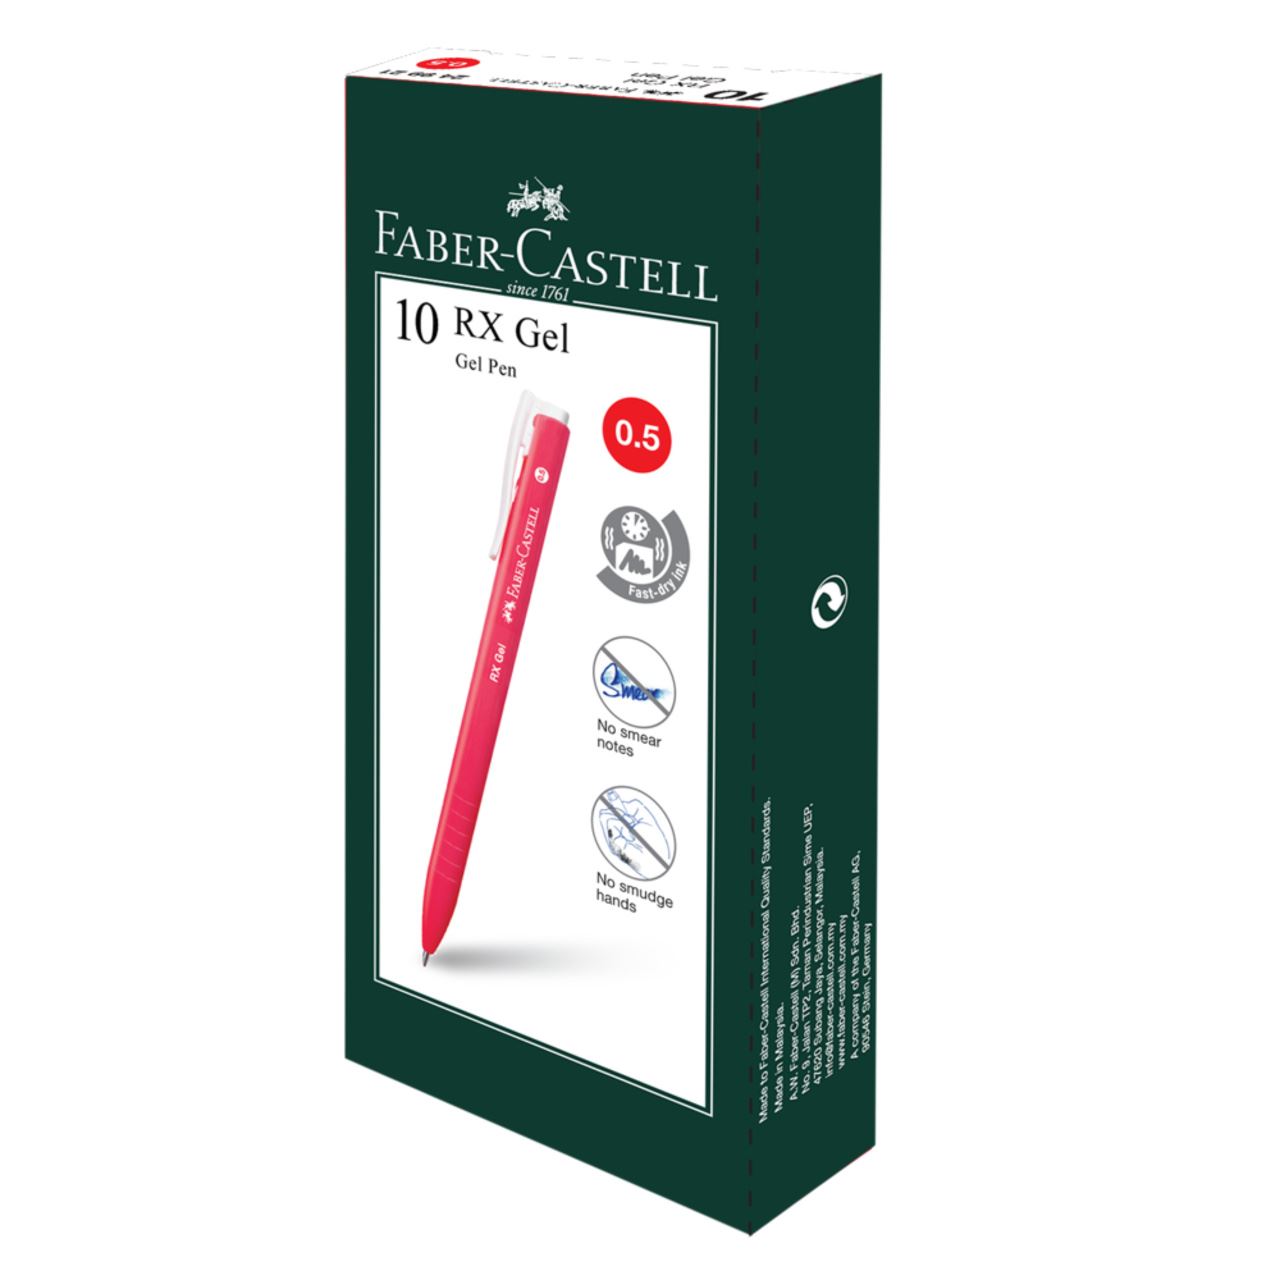 Faber-Castell - Gel pen RX Gel, 0.5mm, red